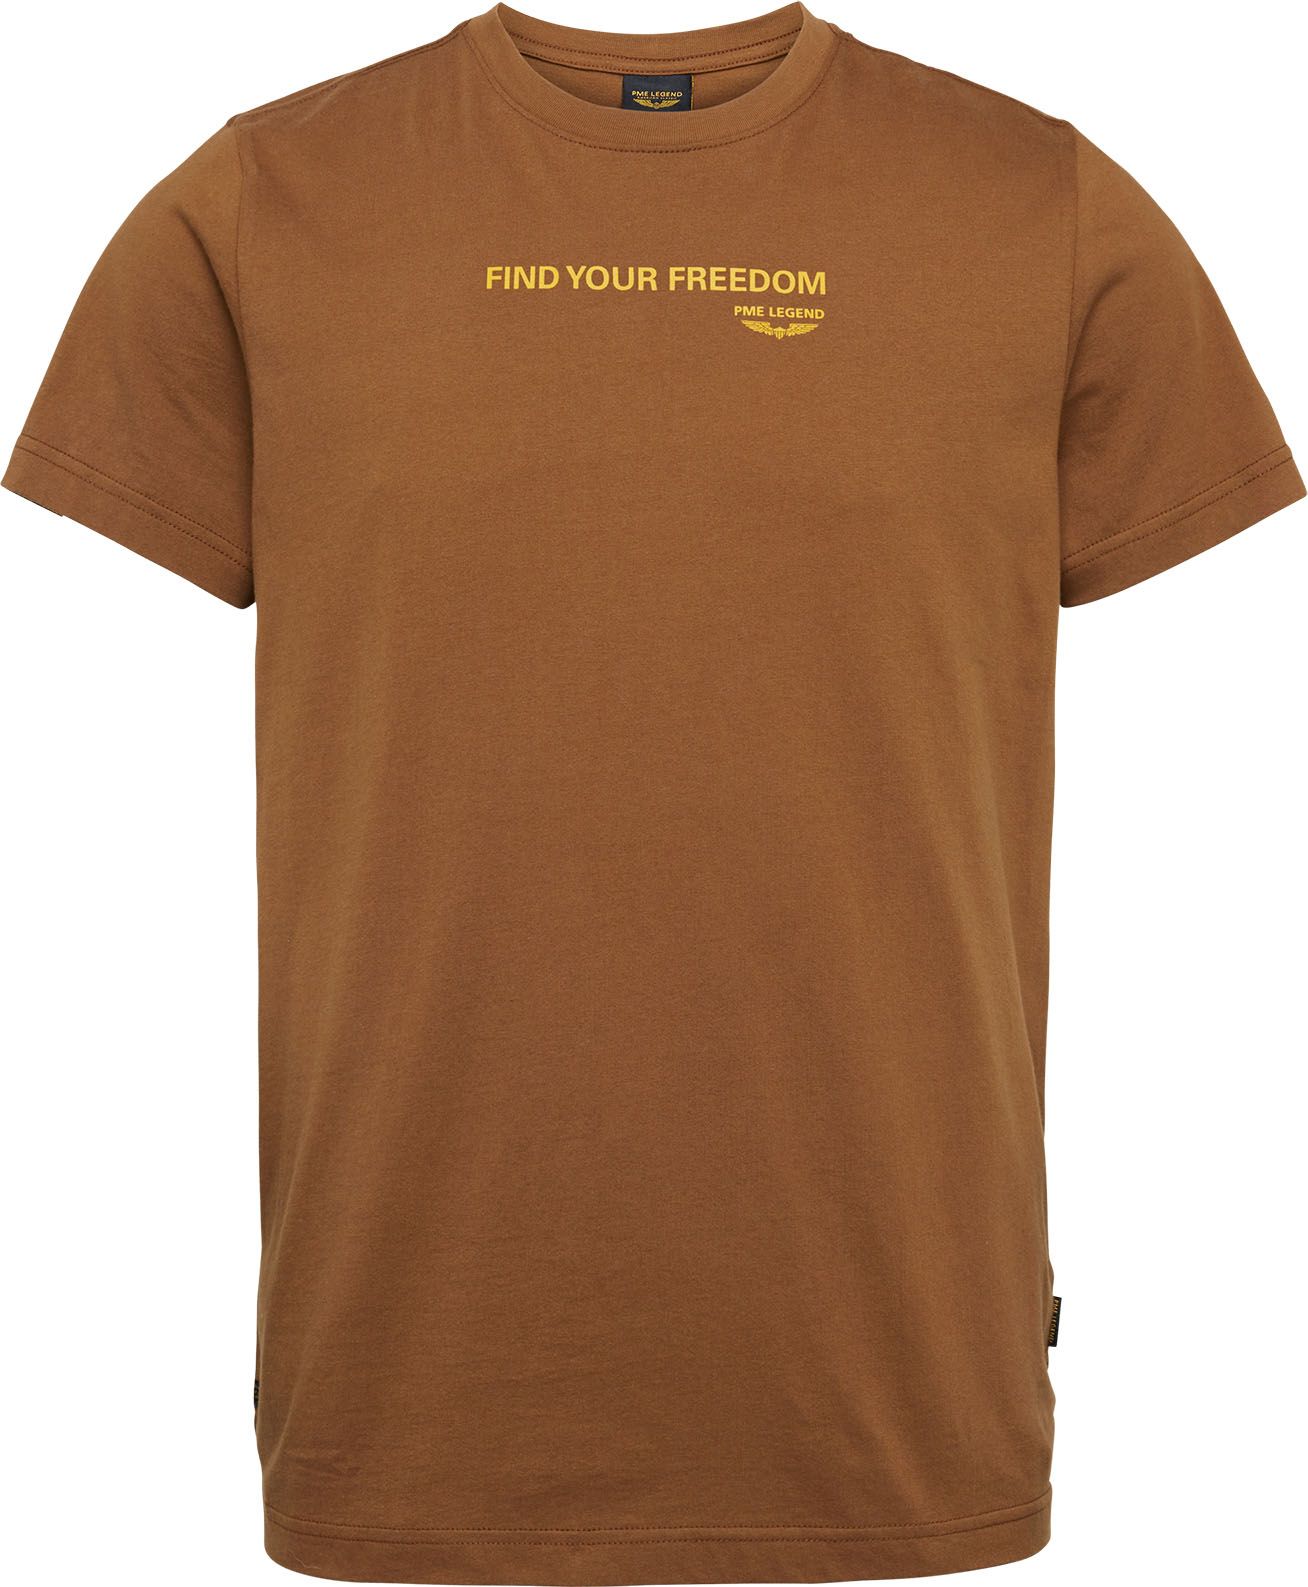 PME Legend T-Shirt Jersey Brown size 3XL